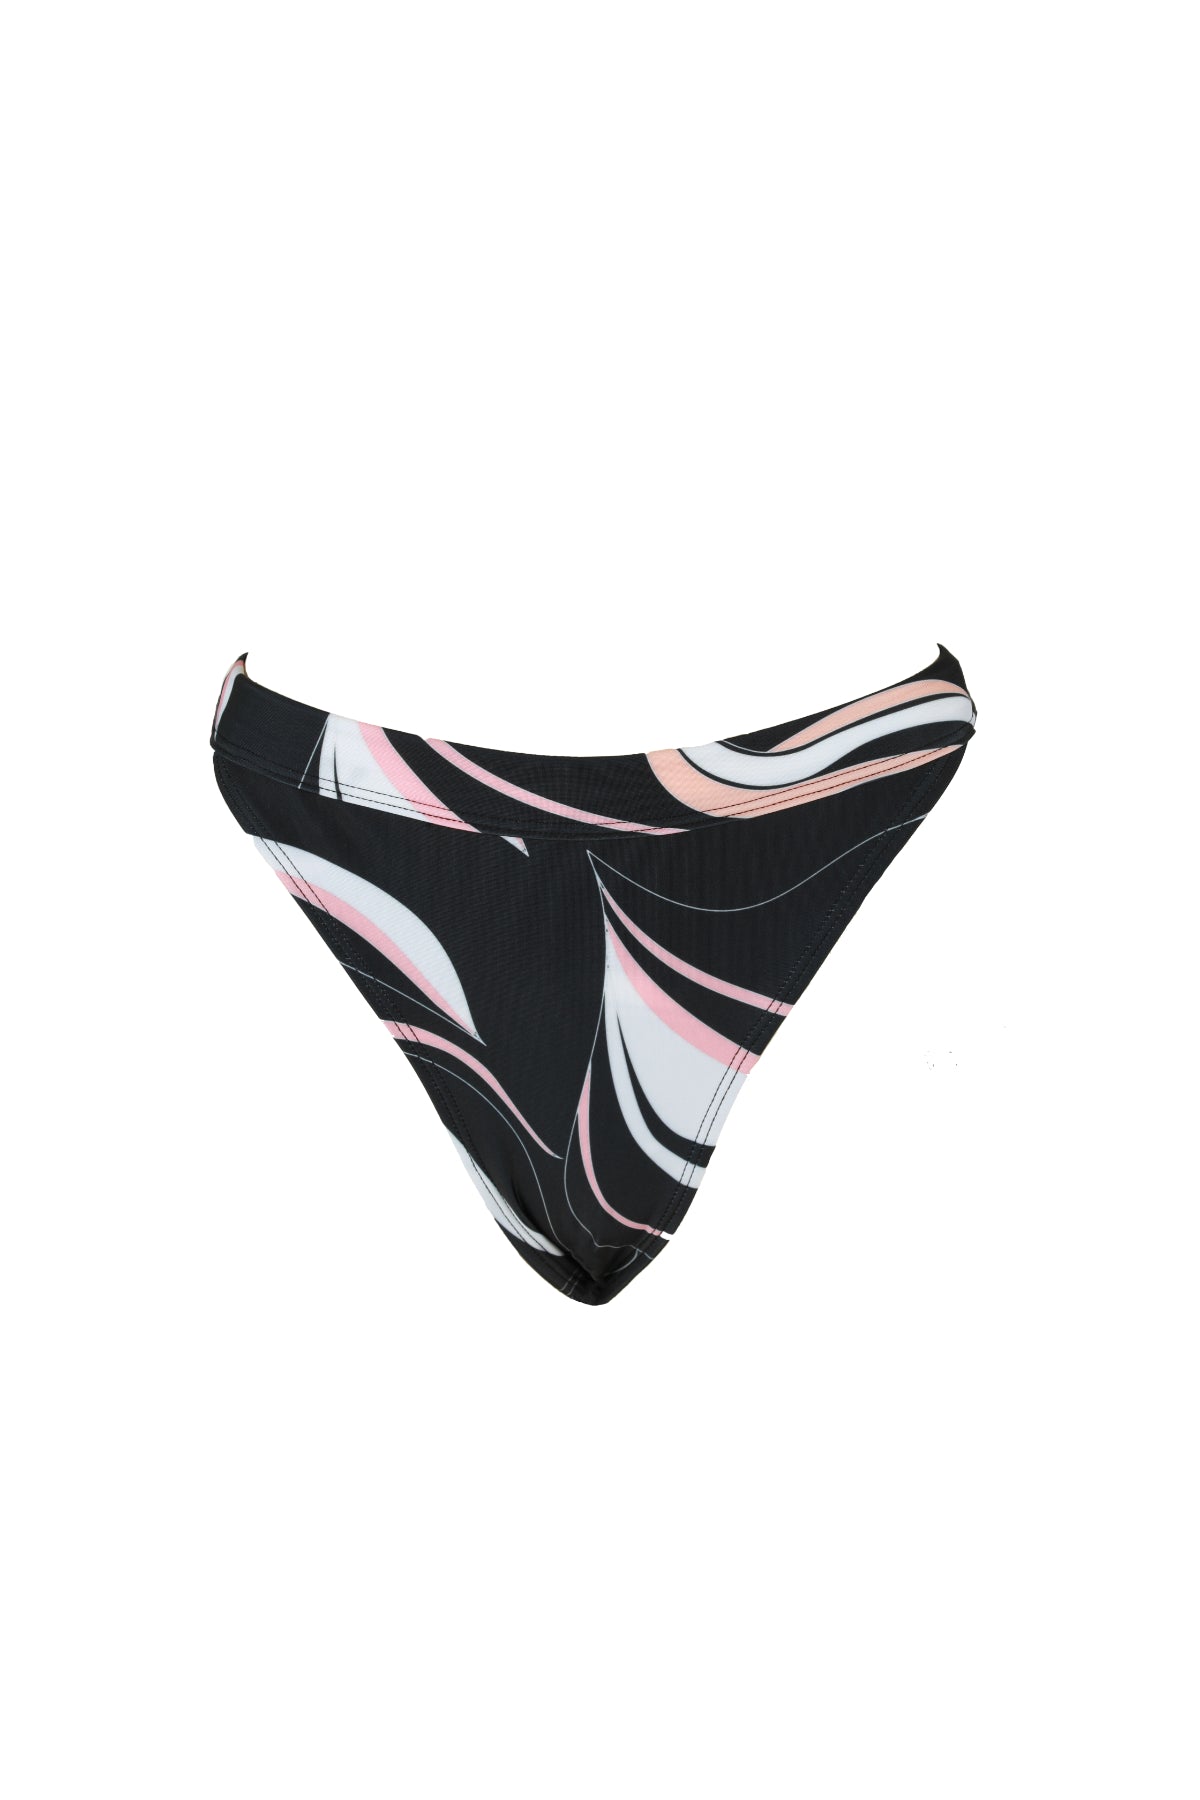 Hedy mid rise bikini bottoms in coral print from luxury sustainable swimwear brand Koraru